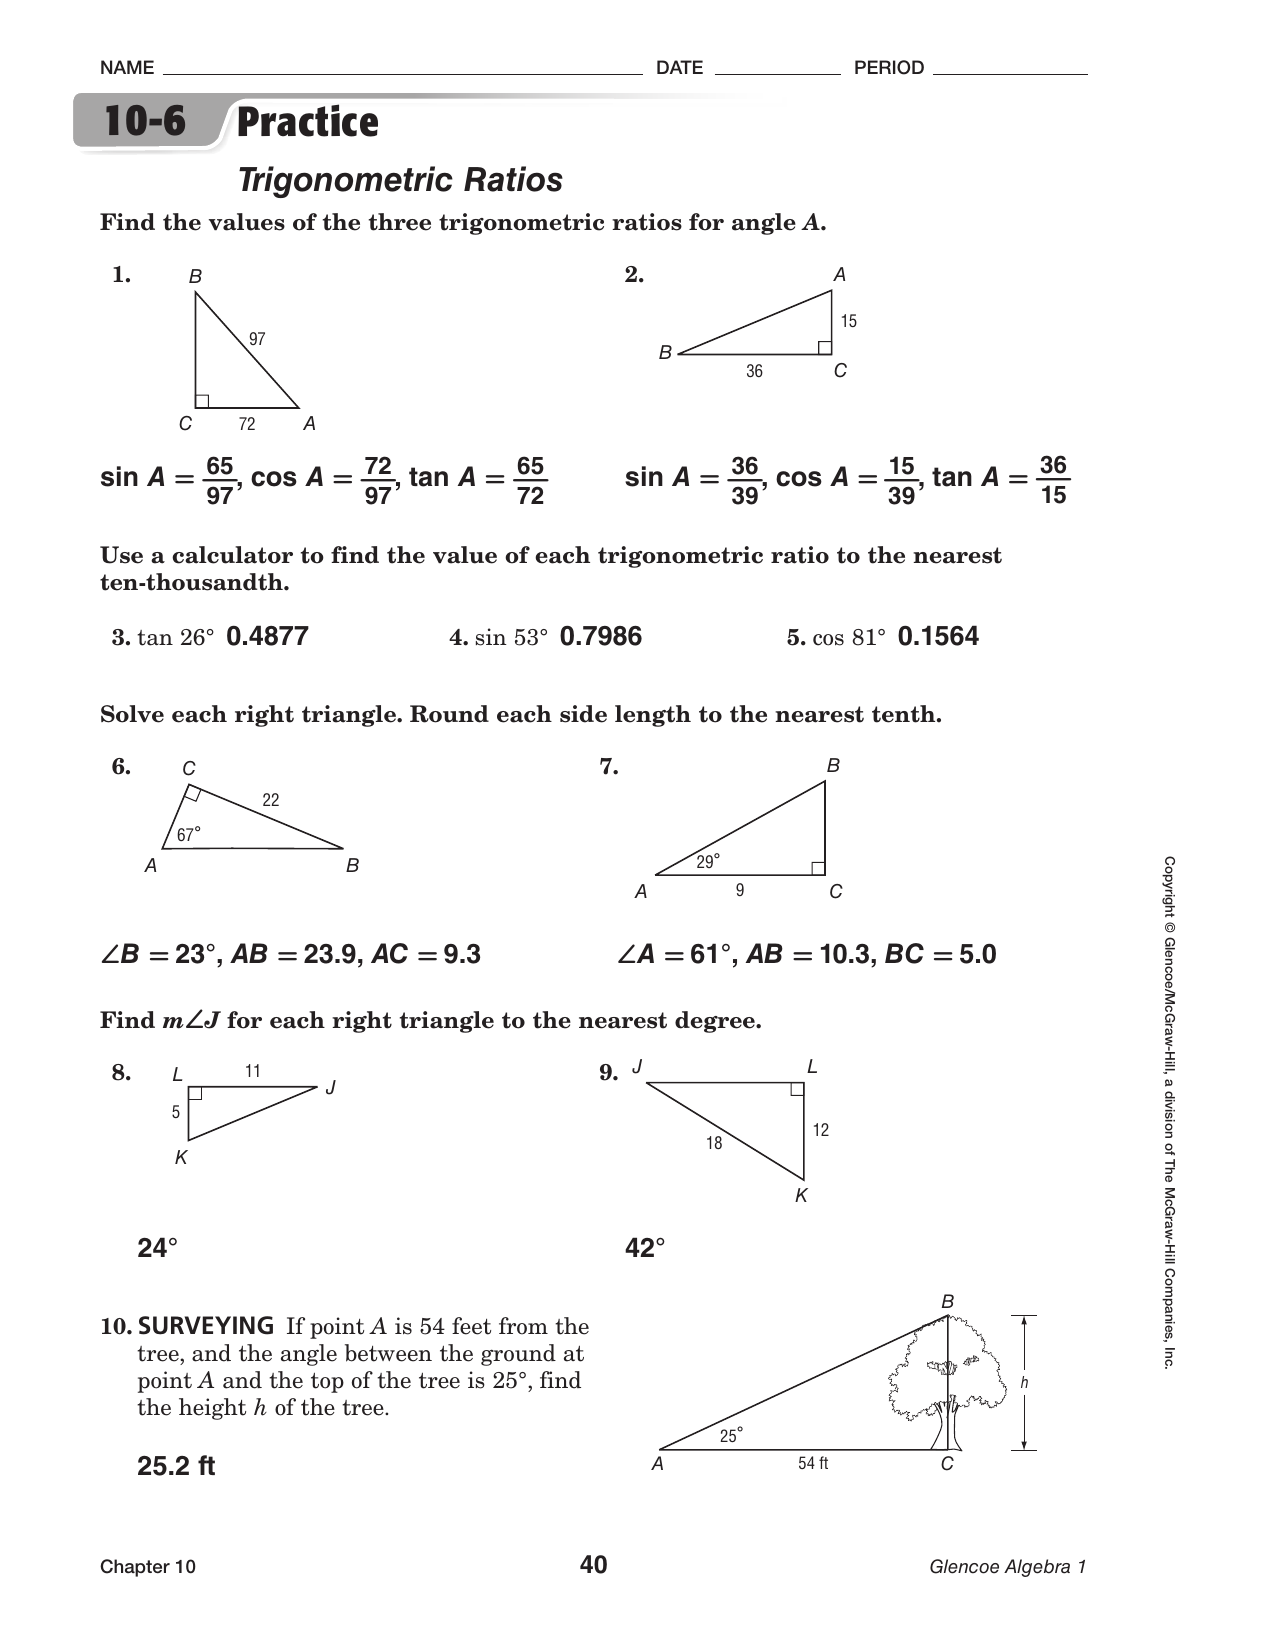 trigonometric-ratios-worksheet-doc-free-download-gambr-co